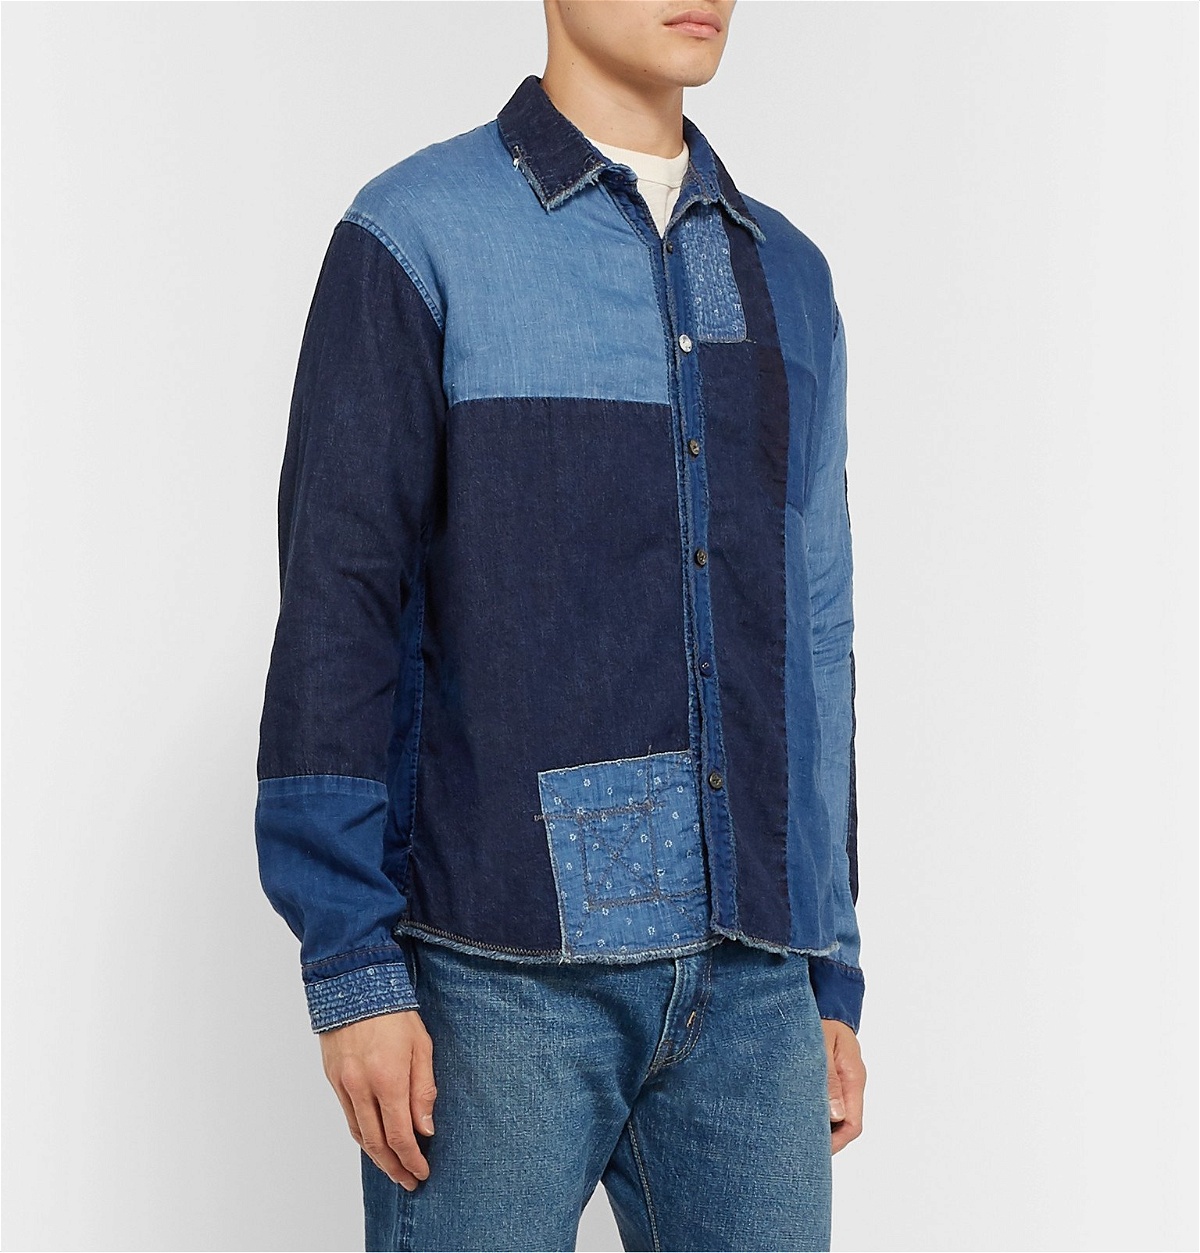 KAPITAL - Distressed Patchwork Linen and Cotton-Blend Chambray Shirt - Blue  KAPITAL